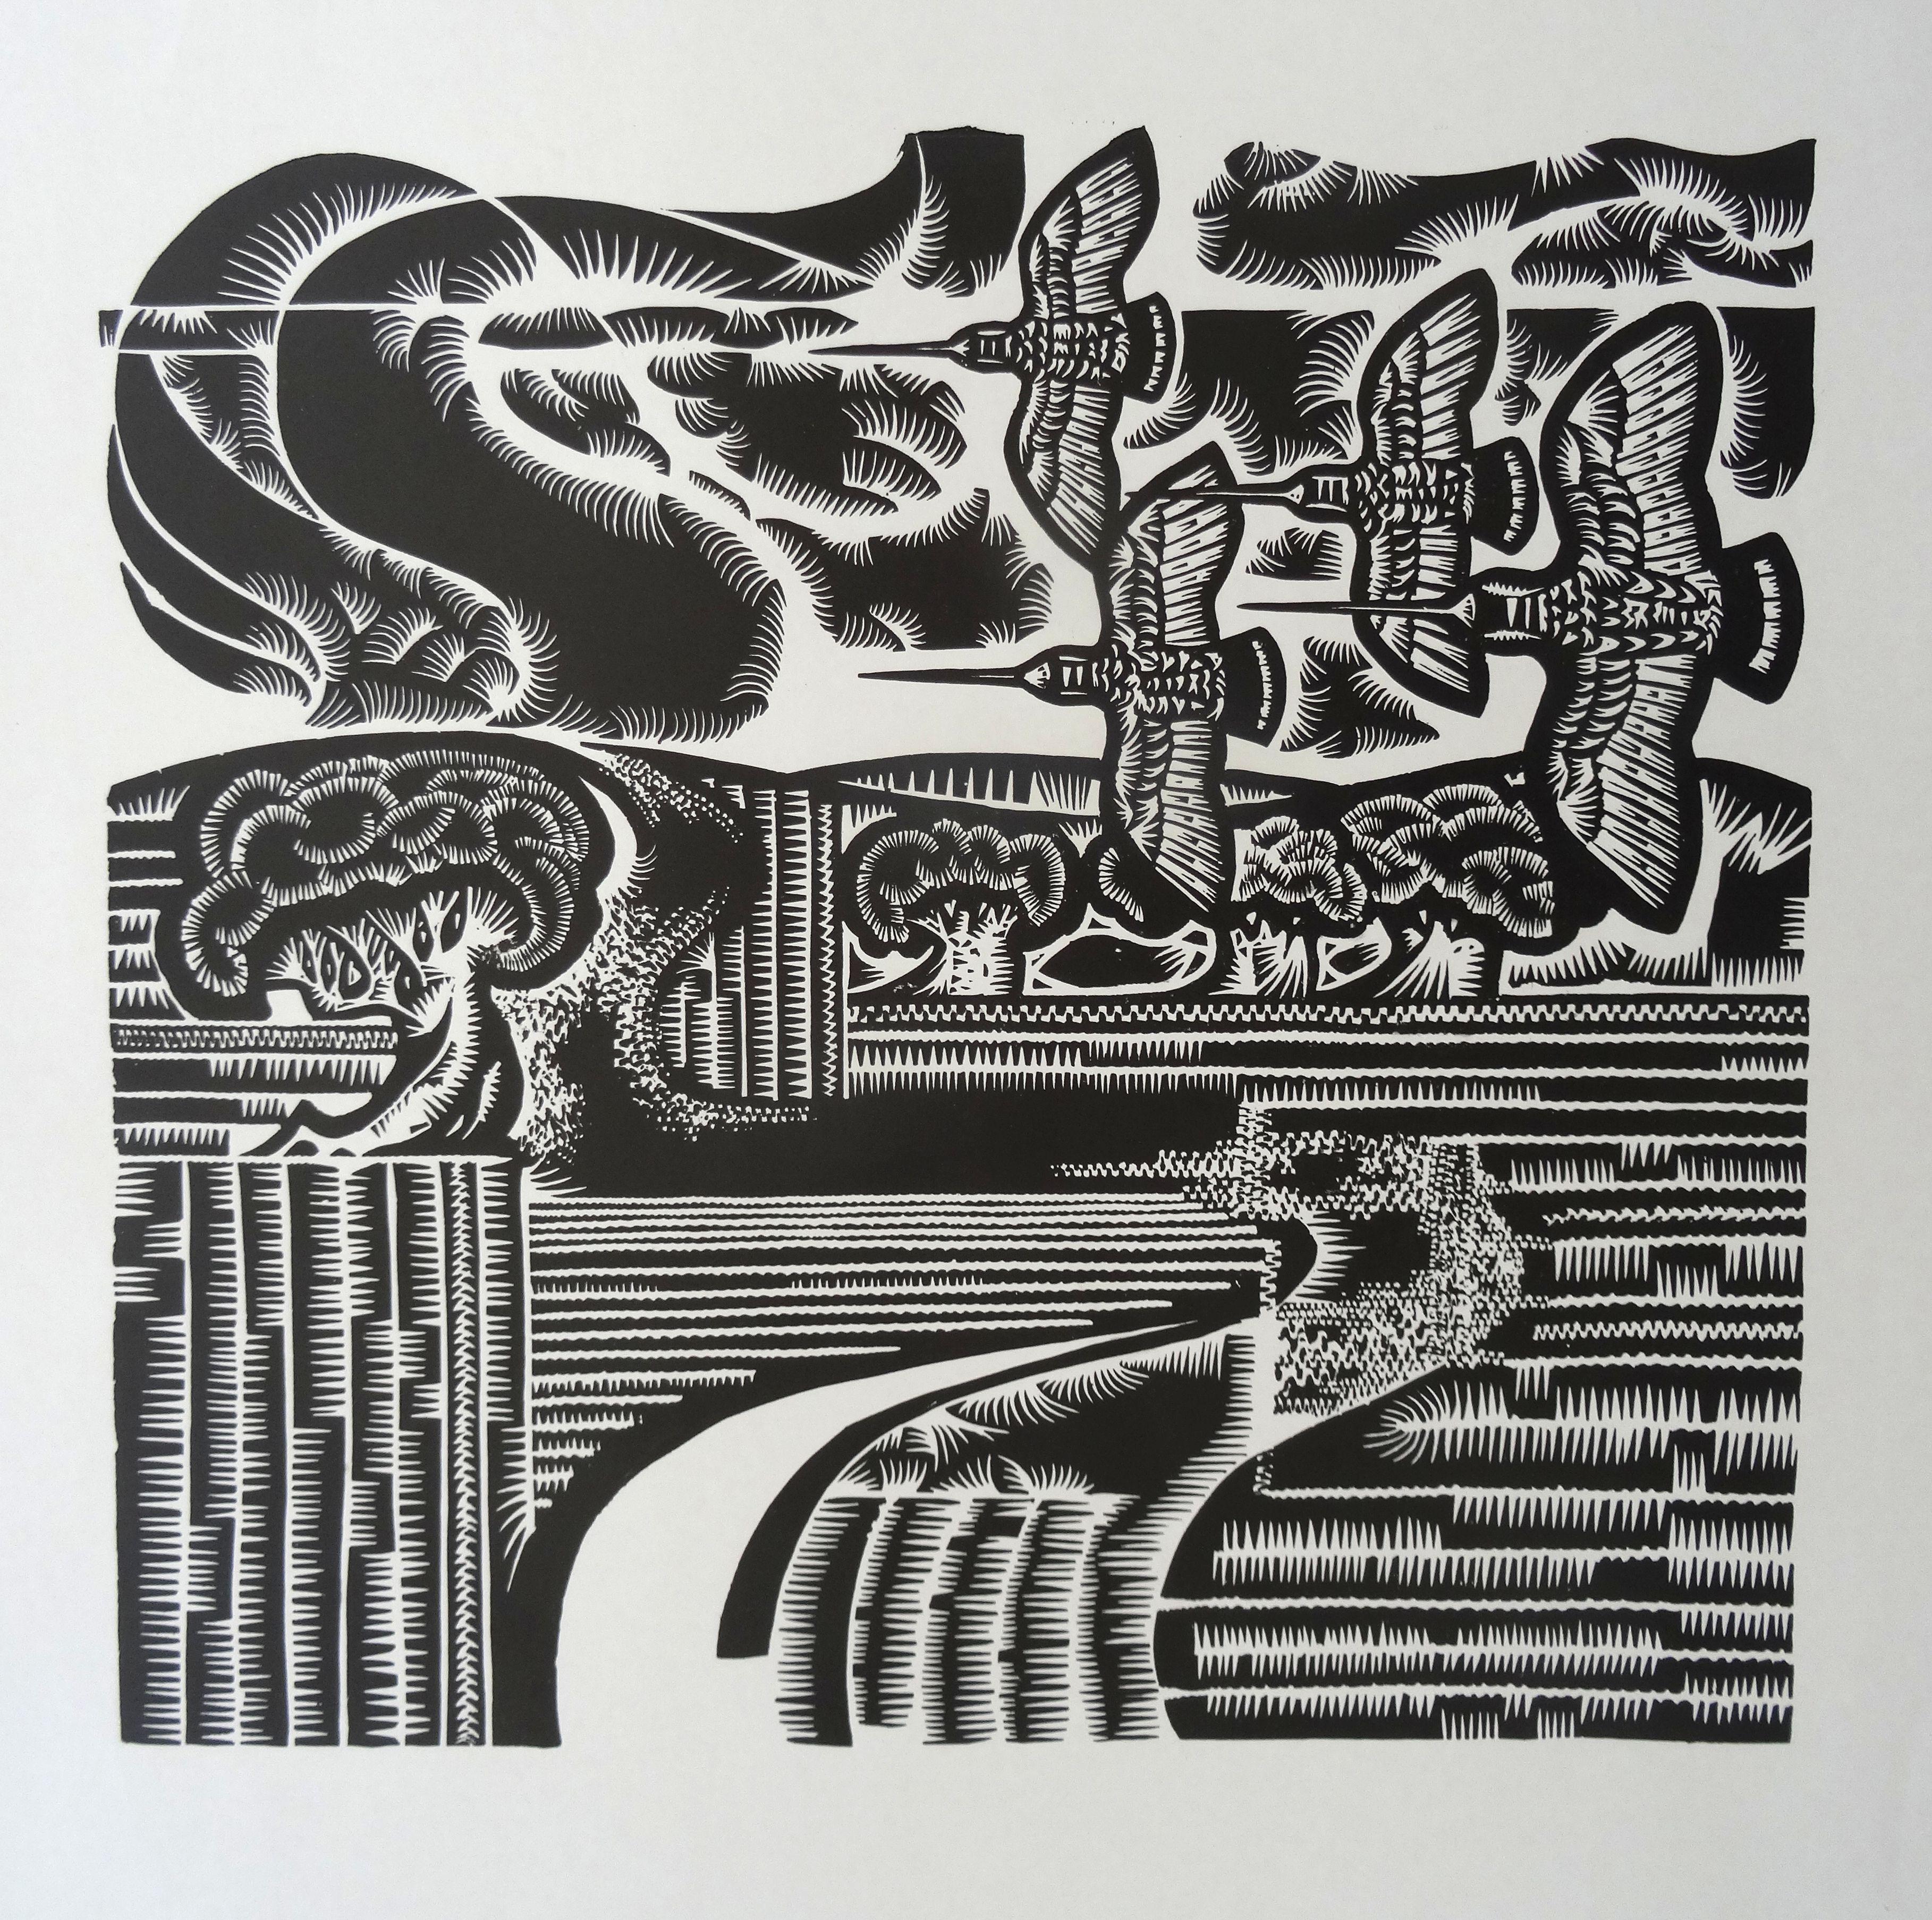 Woodcocks Rückkehr. 1970, Papier, Linolschnitt, Druckgröße 52x55 cm; insgesamt 70x65 cm